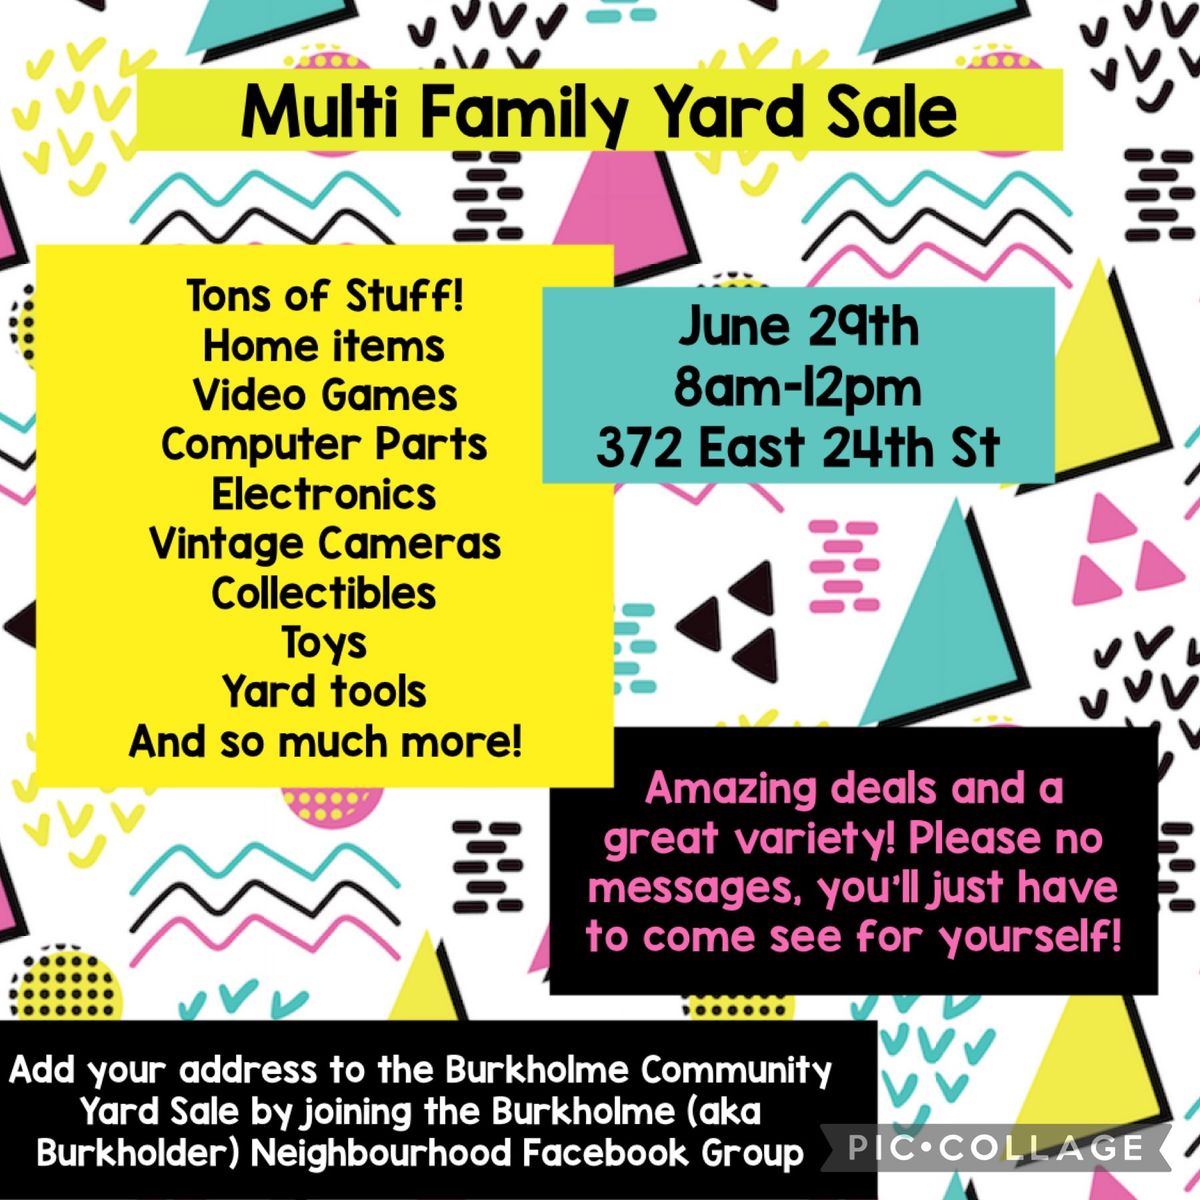 Multi Family Yard Sale - June 29th 8am-12pm